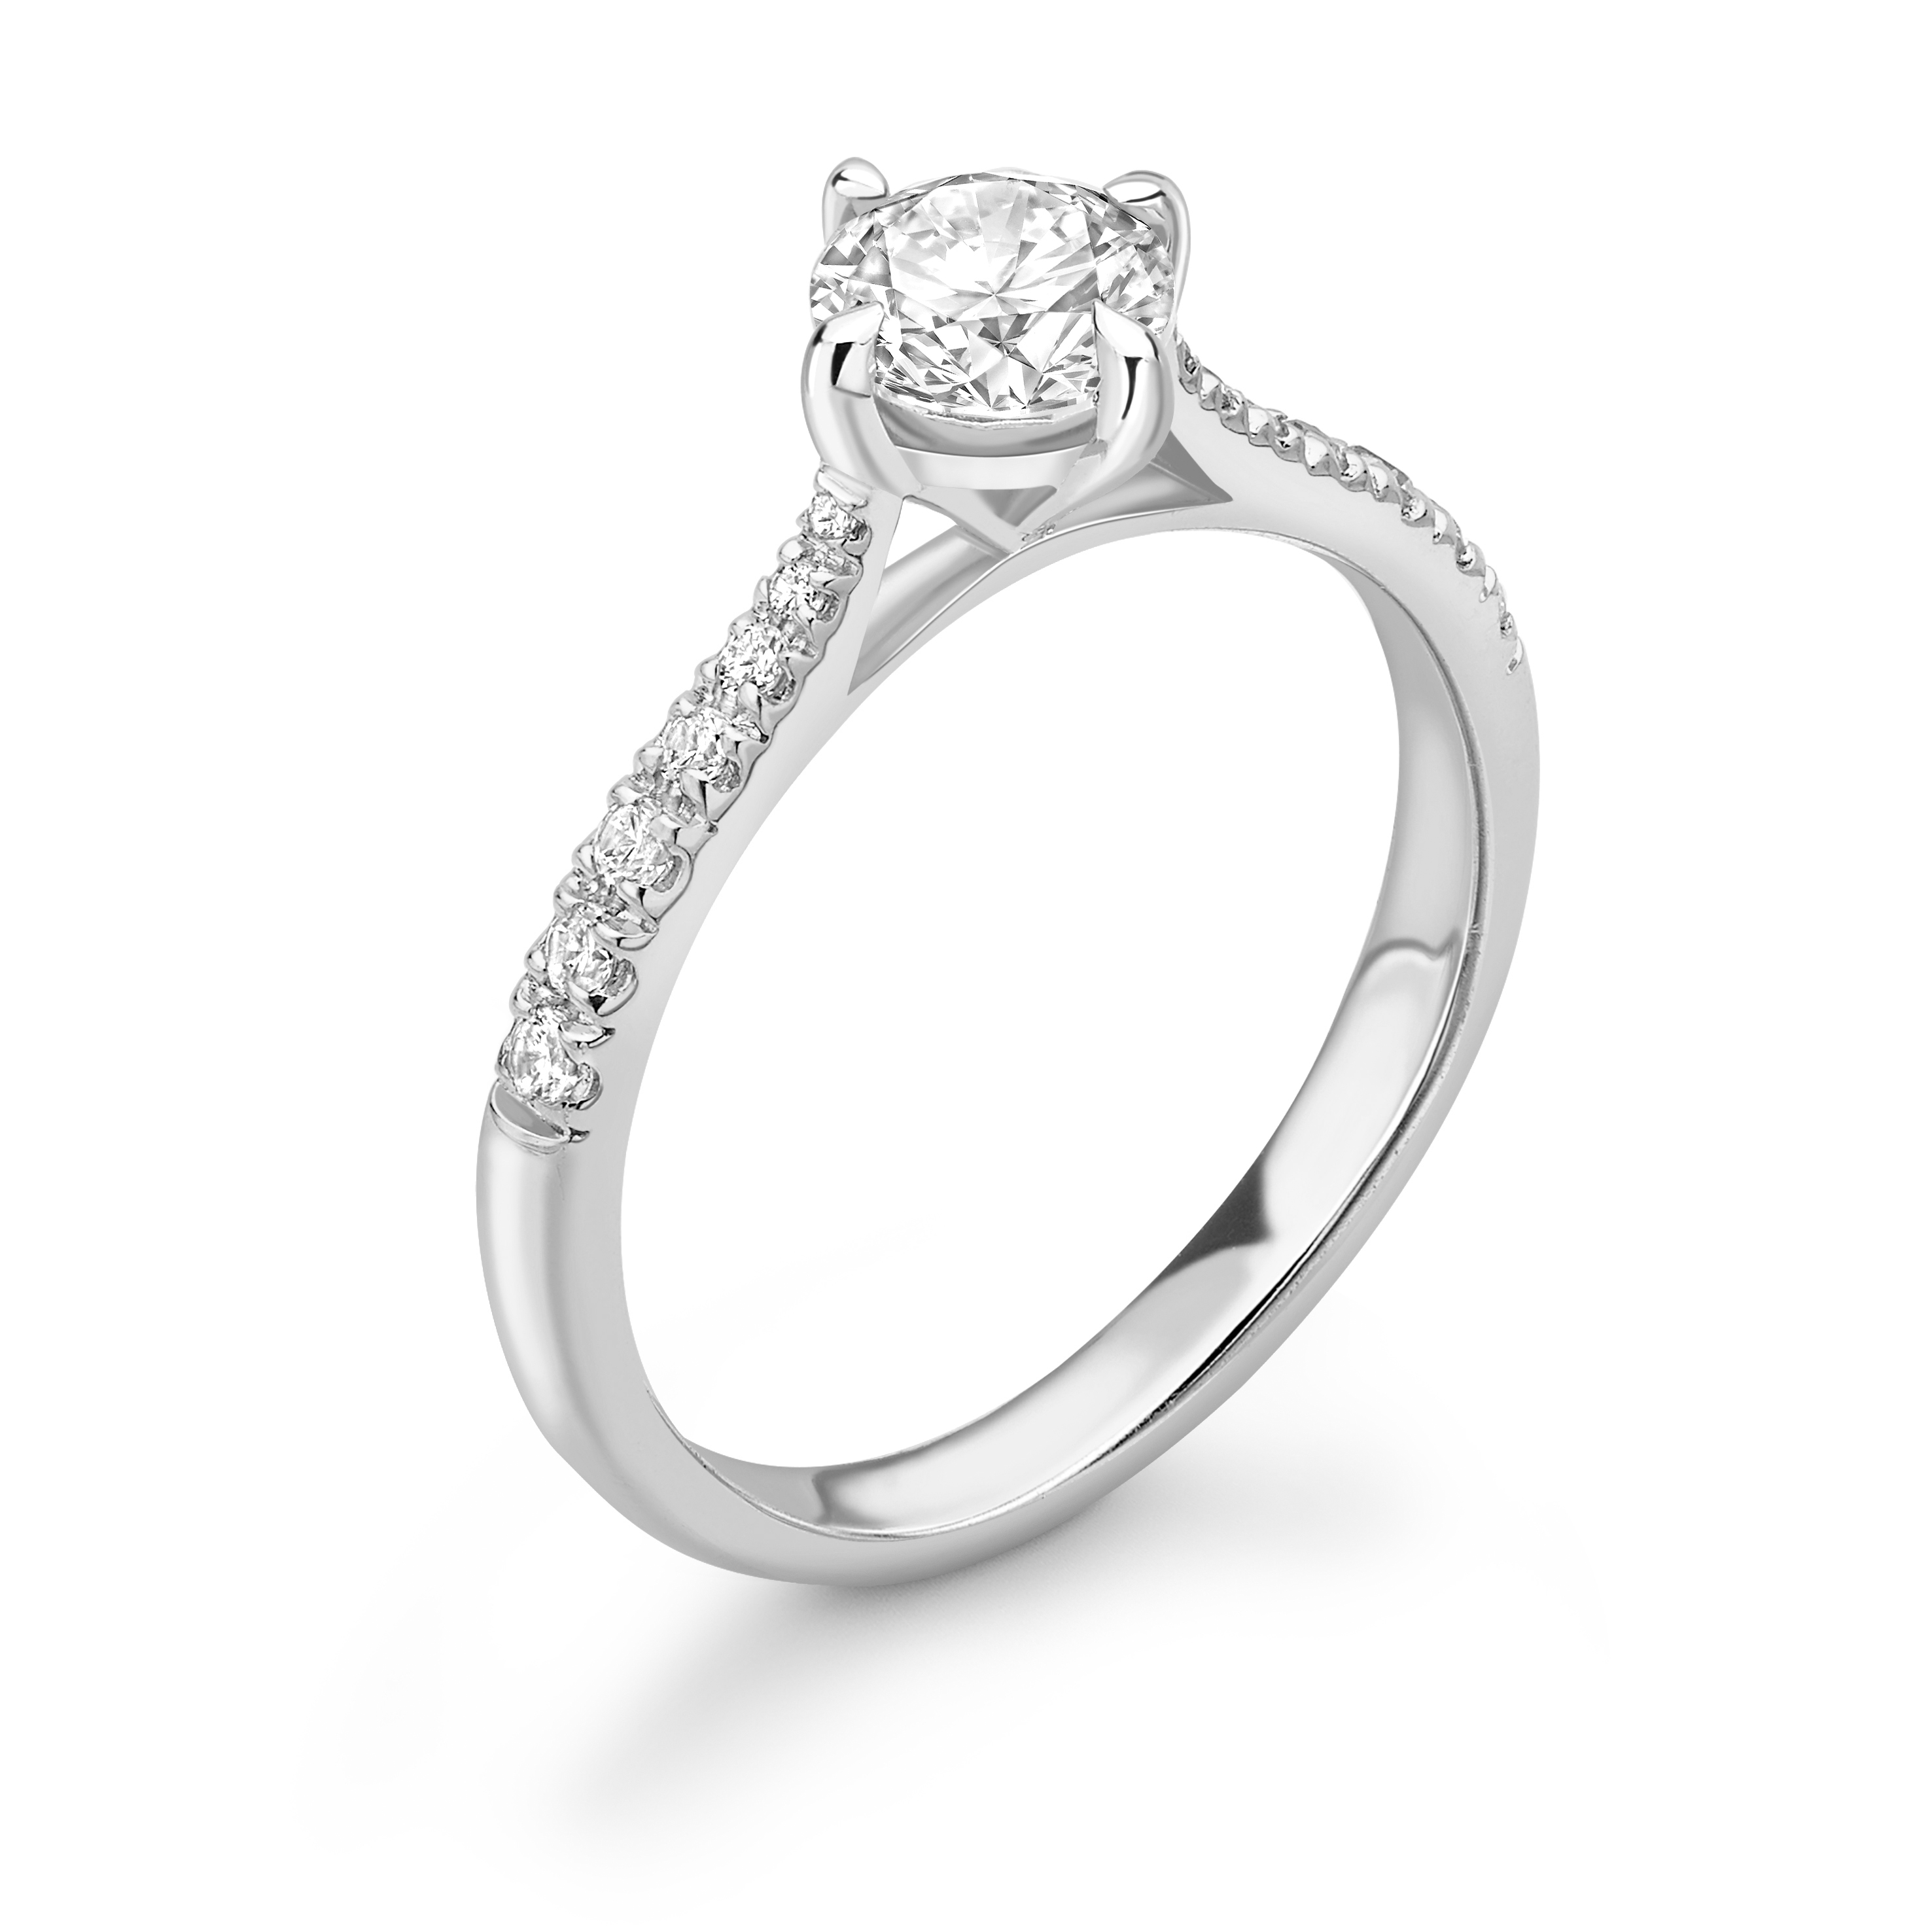 N-W-E-S Setting Tappering Shoulder Side Stone Diamond Engagement Rings